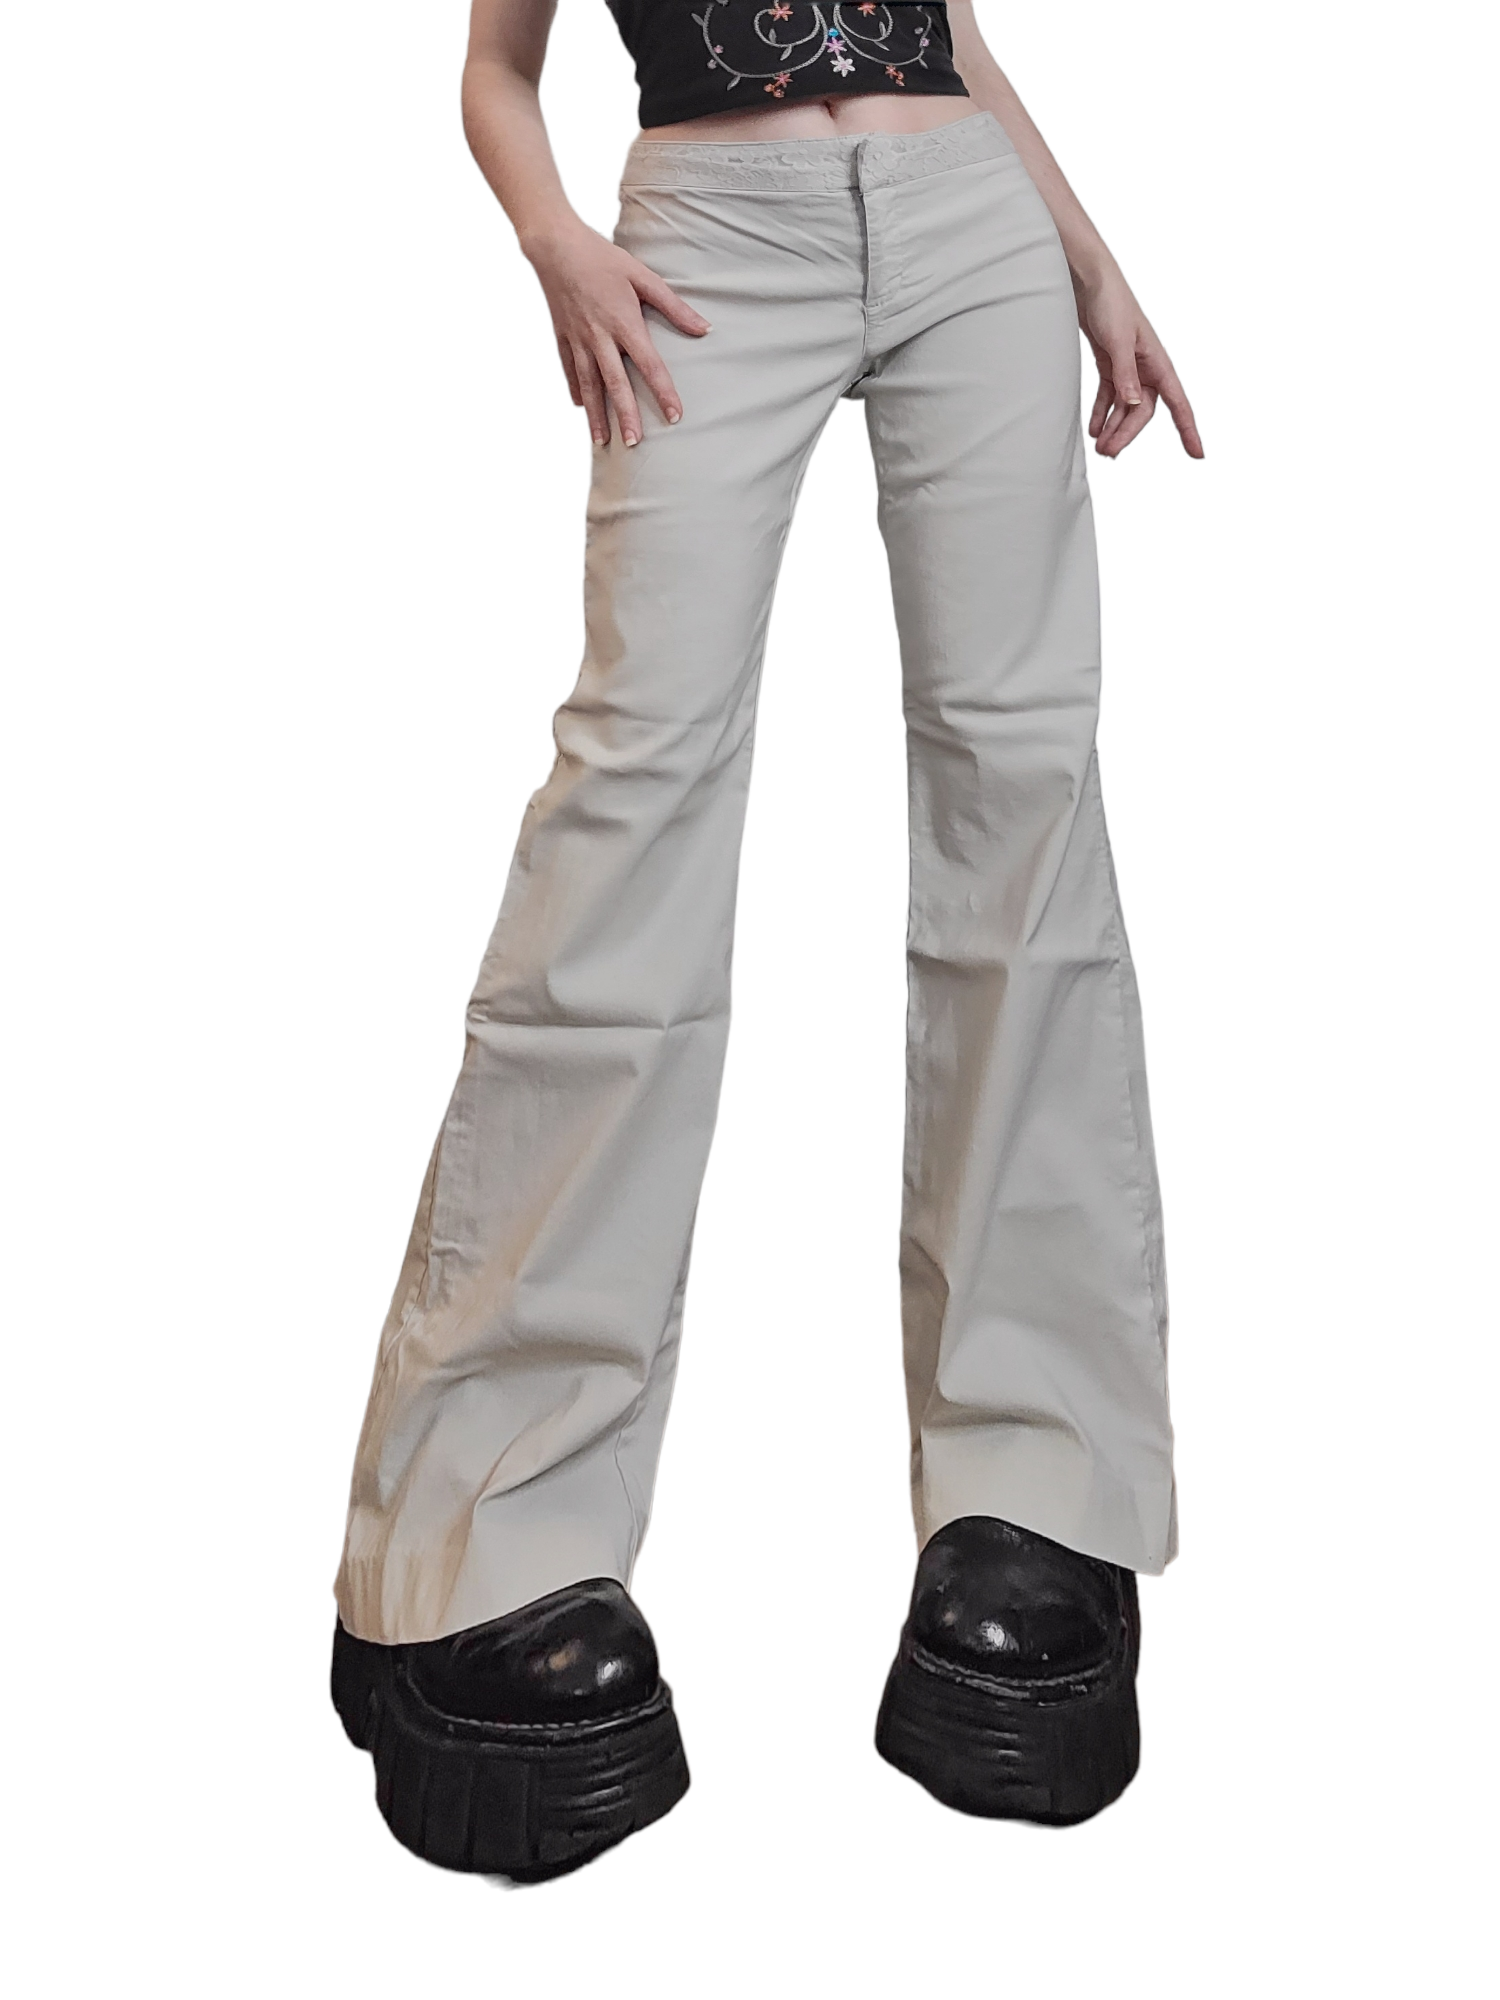 Flared pants dentelle coquette style y2k 2000 pattes deph minimalist neutral style 